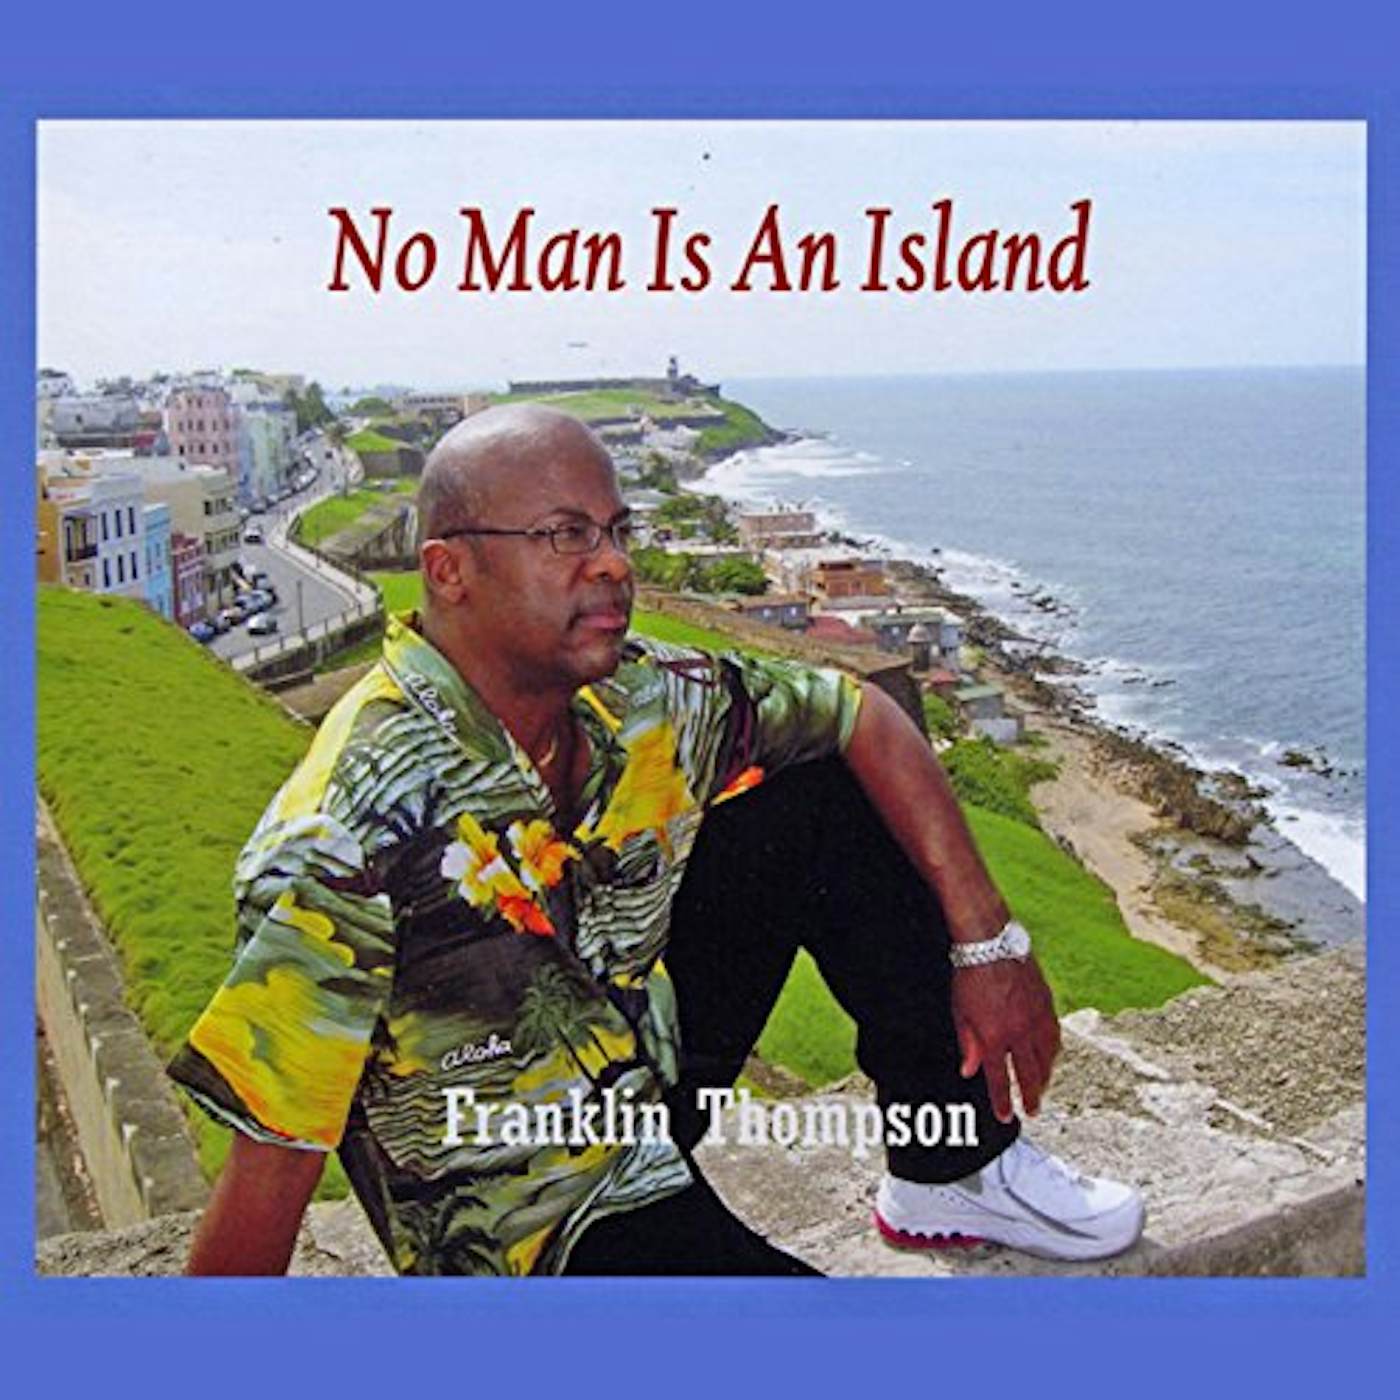 Franklin Thompson NO MAN IS AN ISLAND CD